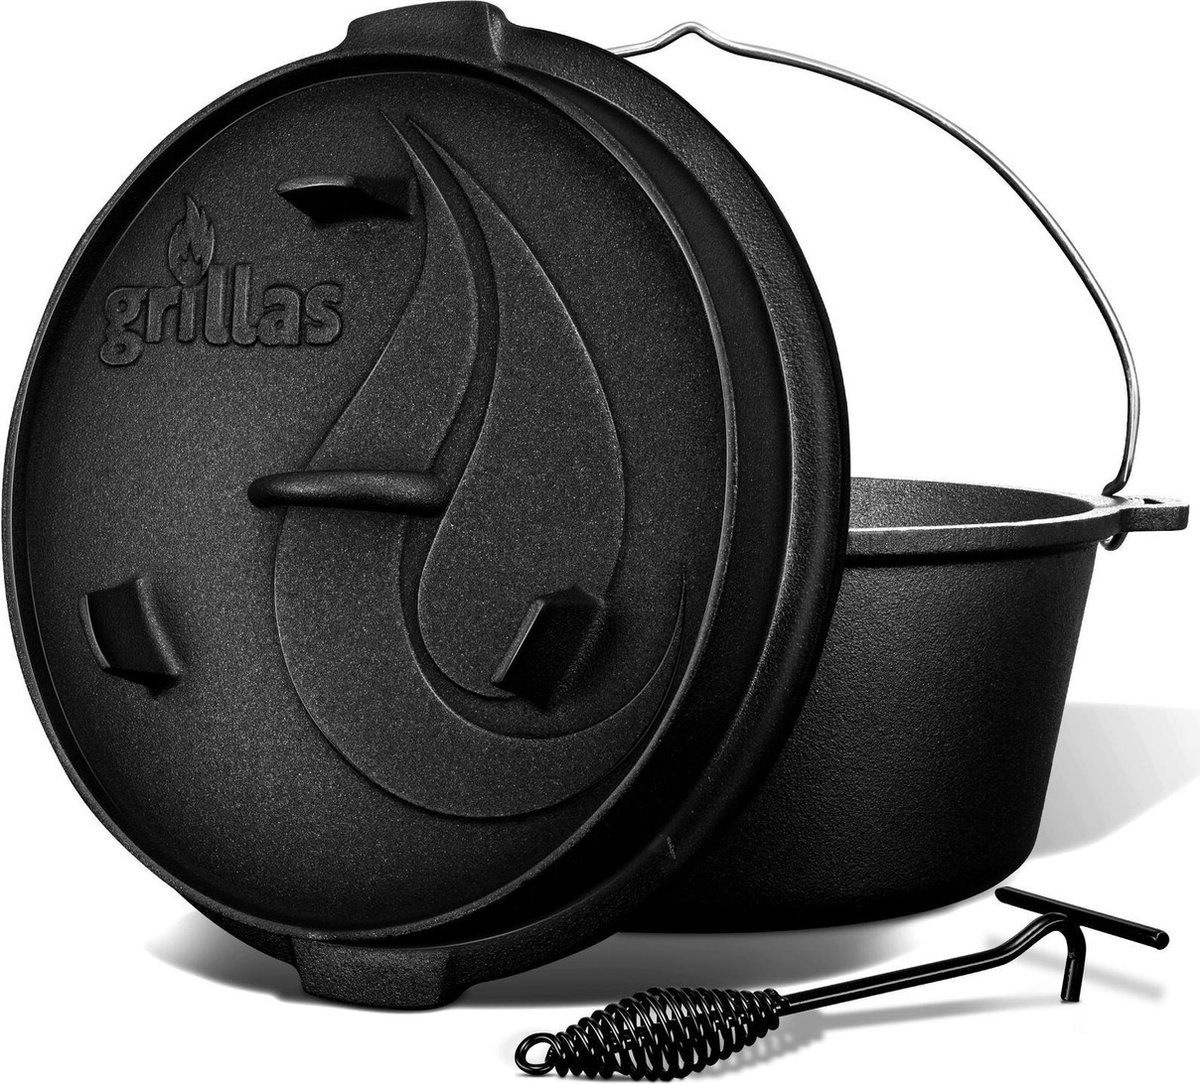 Grillas- Dutch Oven, 4.2L, BBQ pan, gietijzer